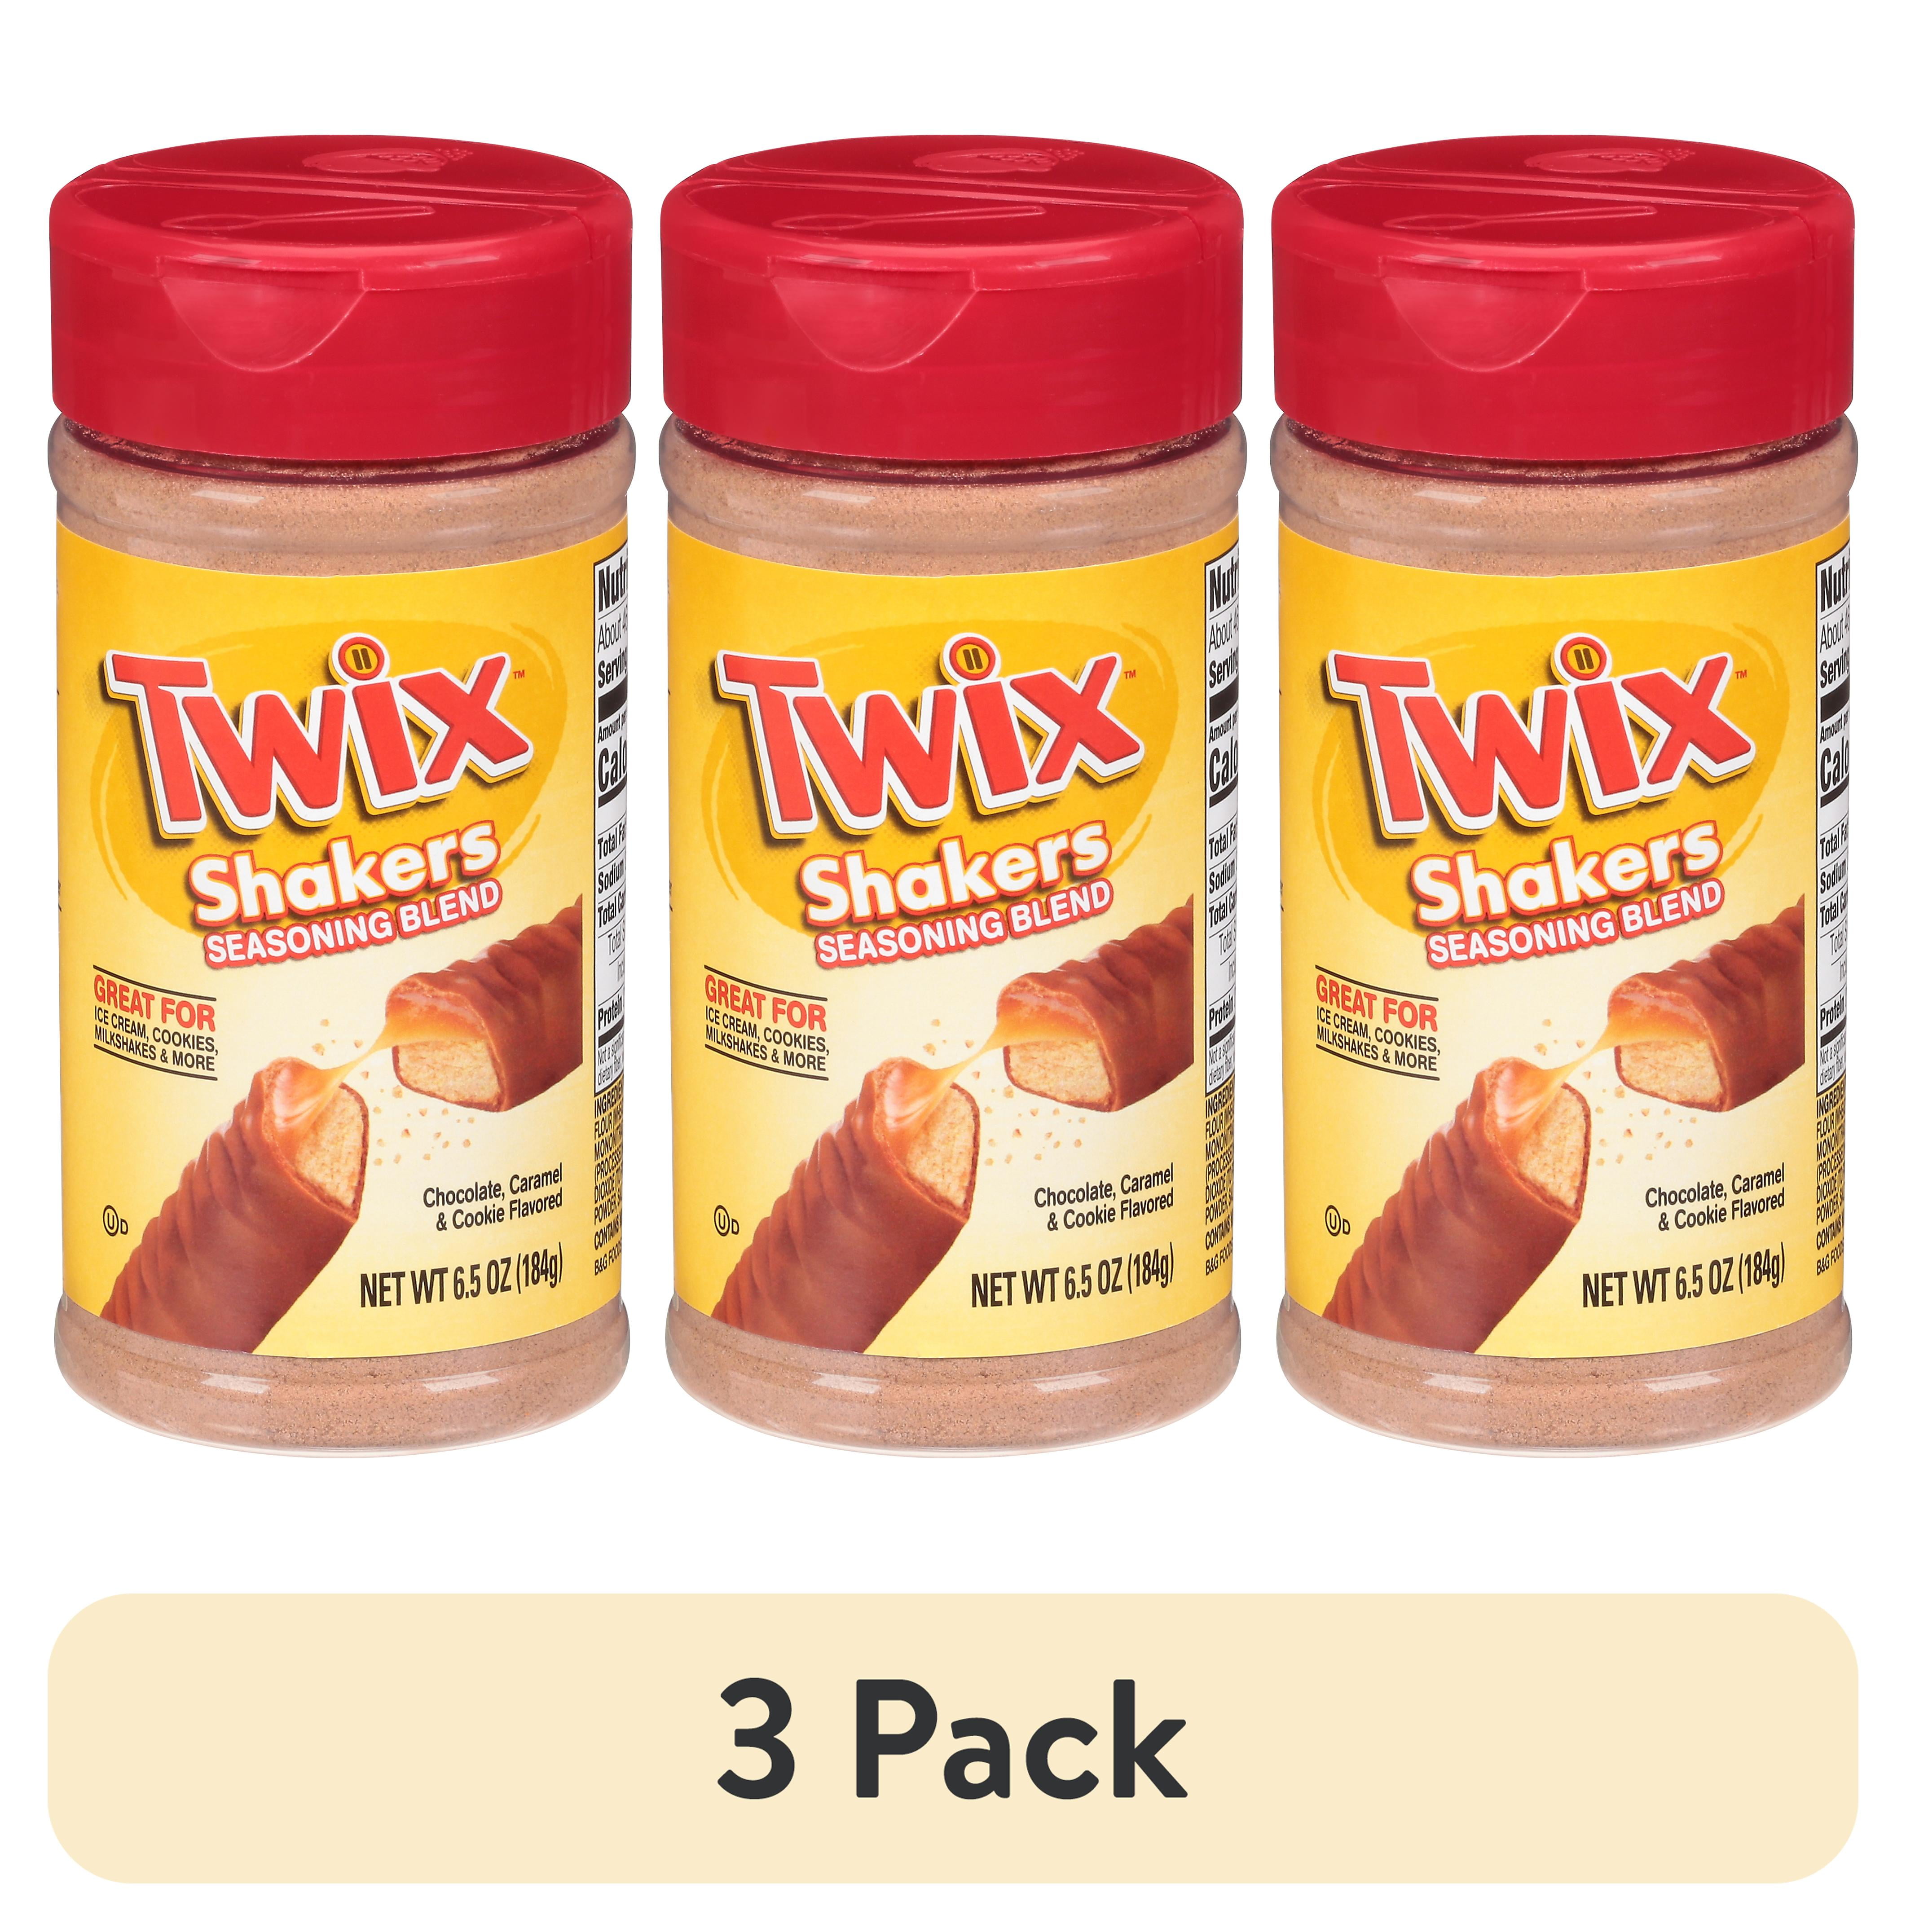 Twix Shakers Seasoning Blend! 😍 👀 - The Junk Food Aisle